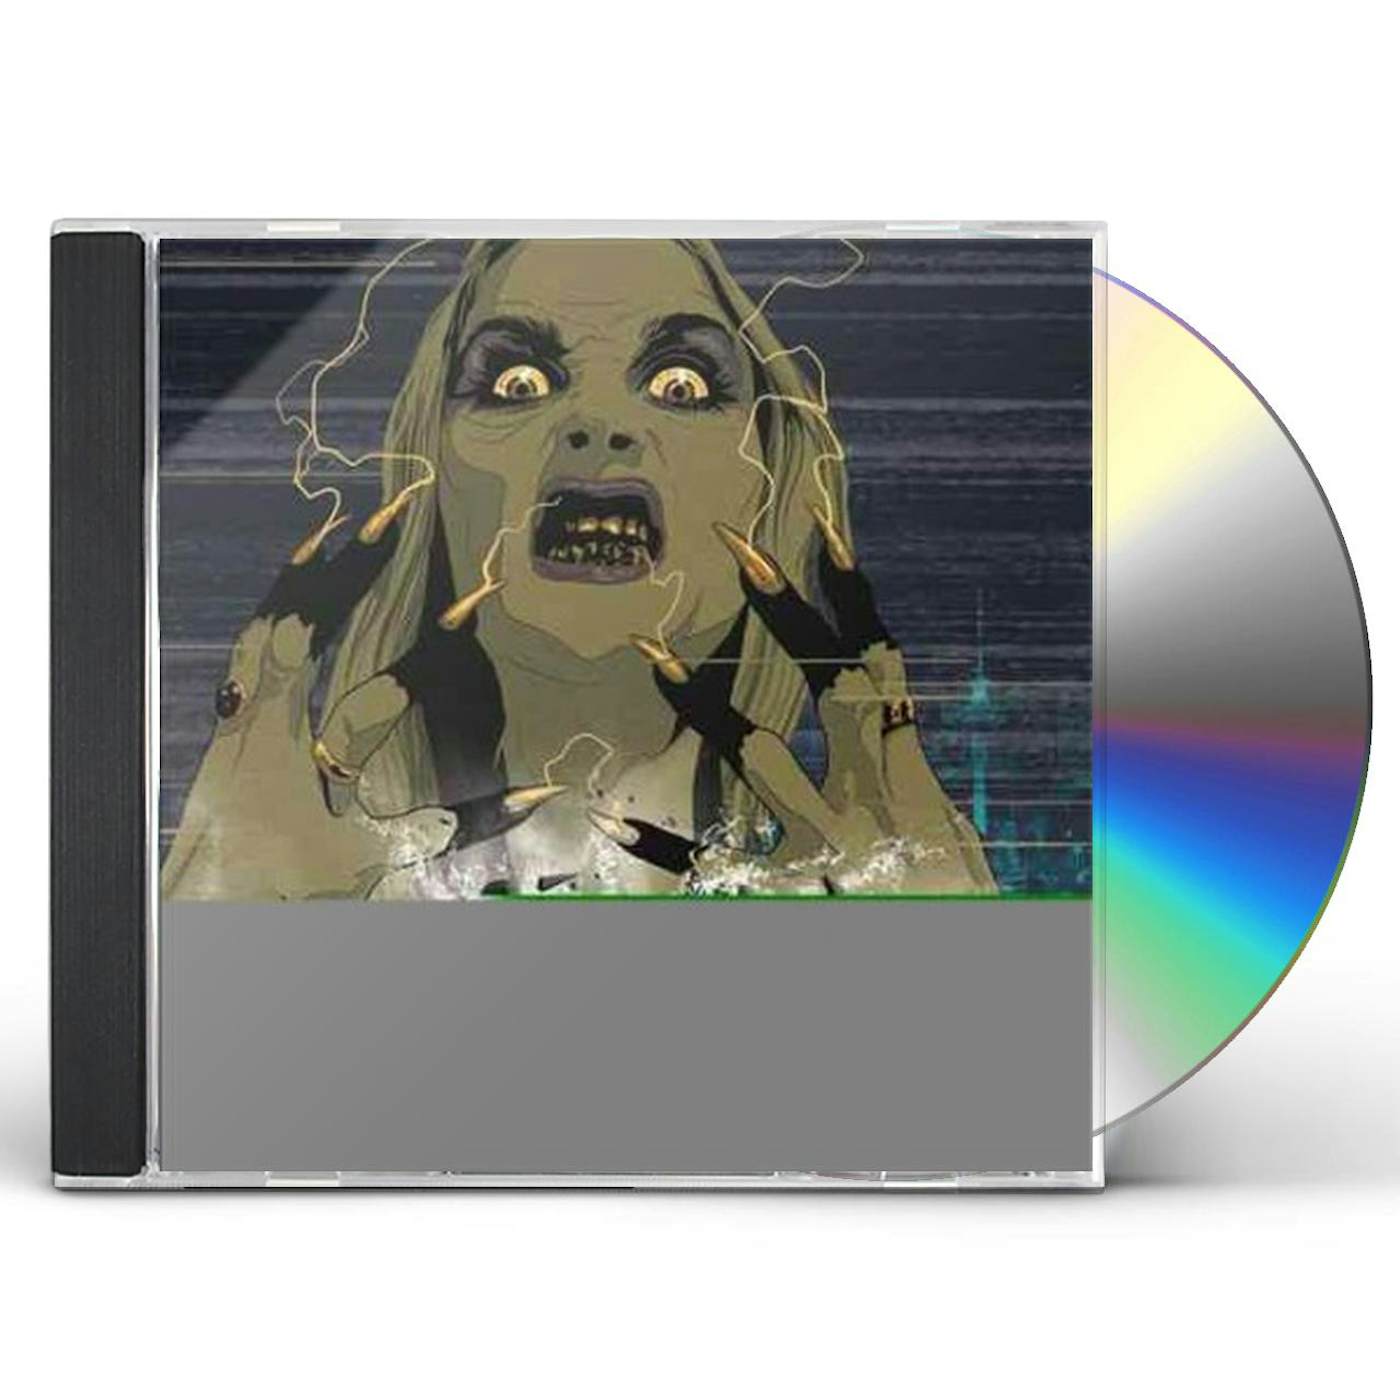 Huntress STATIC CD